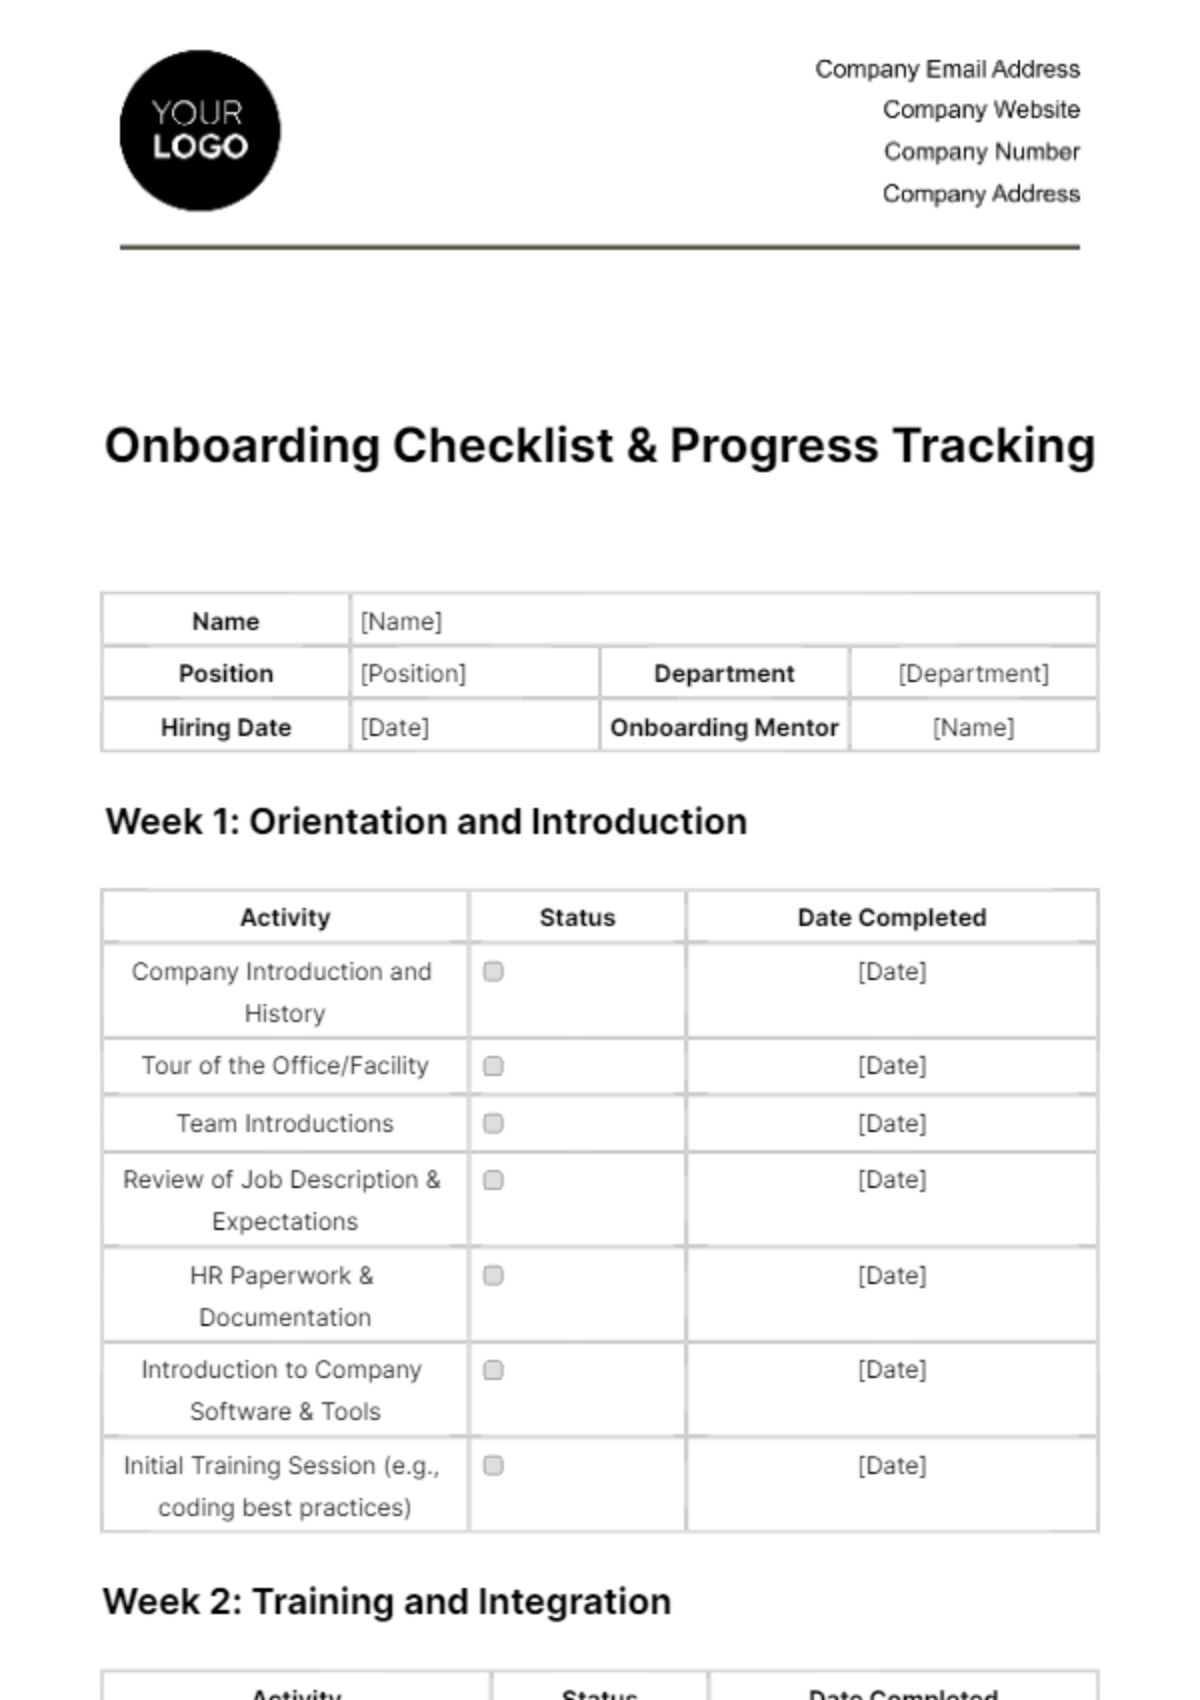 Onboarding Checklist & Progress Tracking HR Template